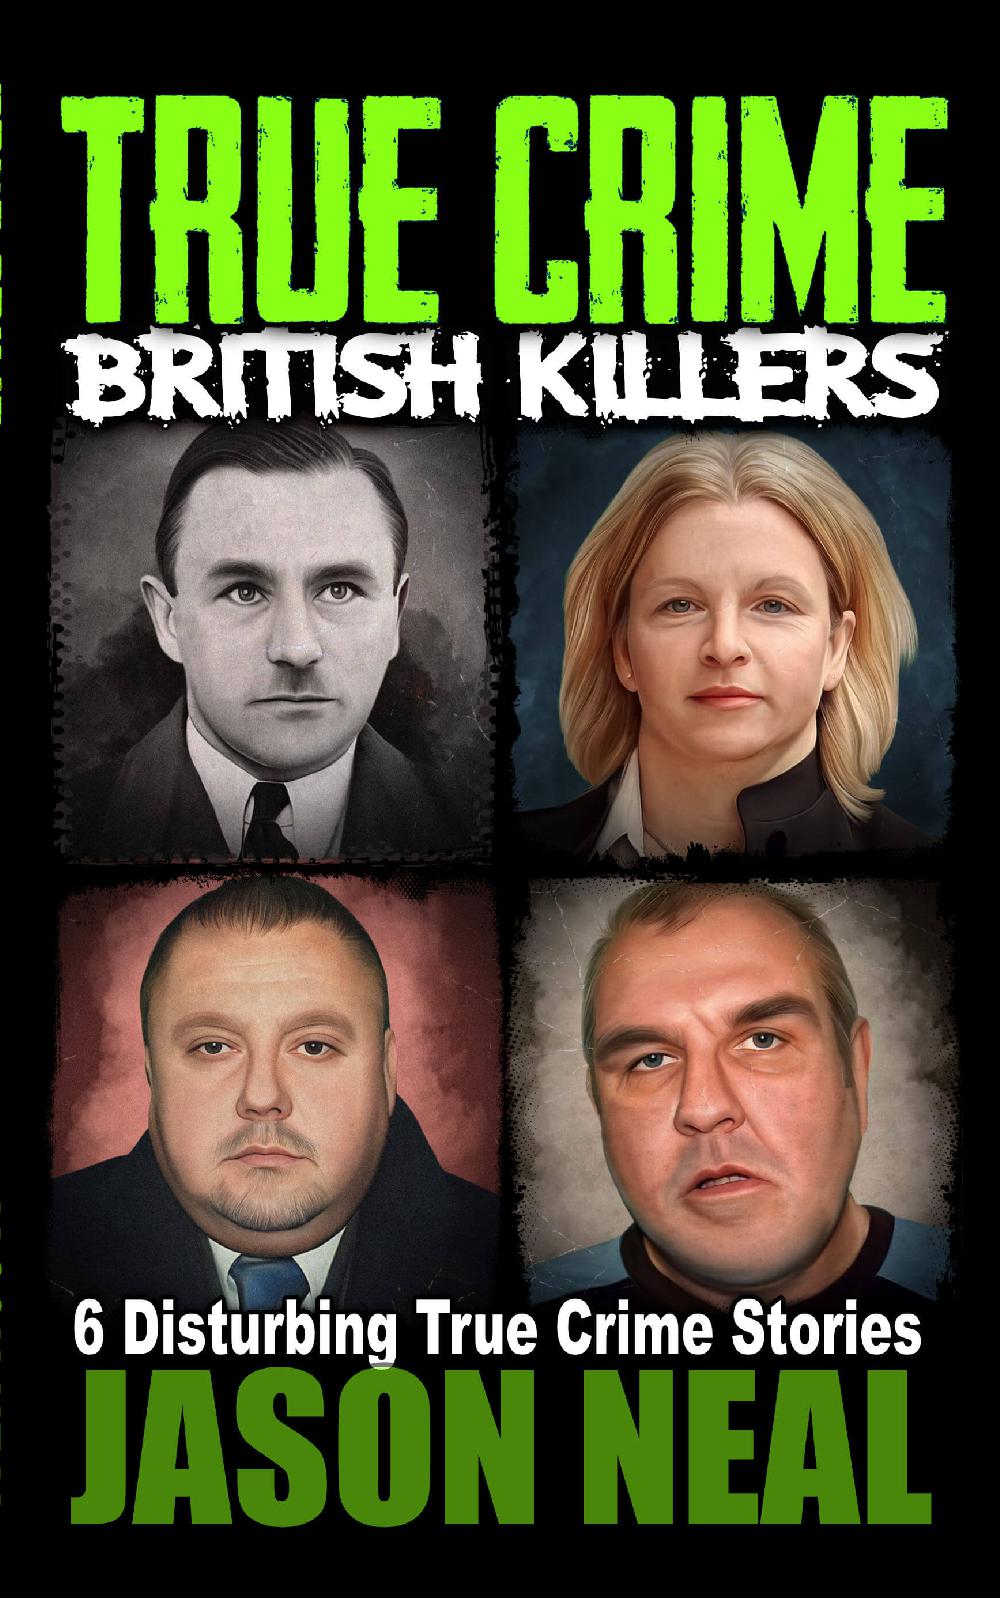 True Crime: British Killers (Paperback)